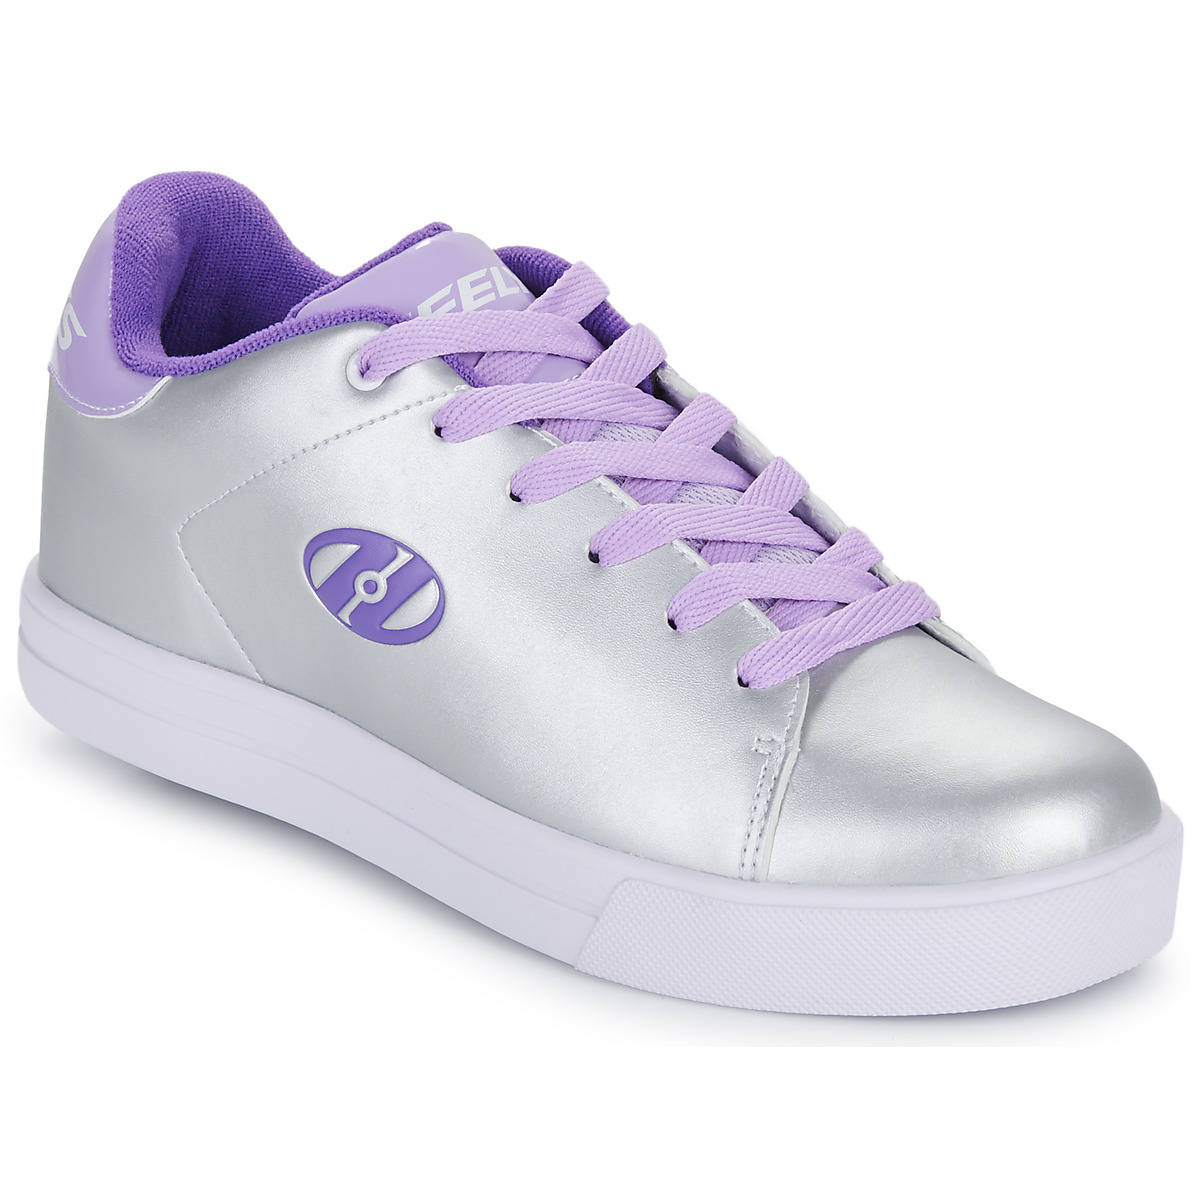 BAIT Footwear Irella Shoes – miss victory violet